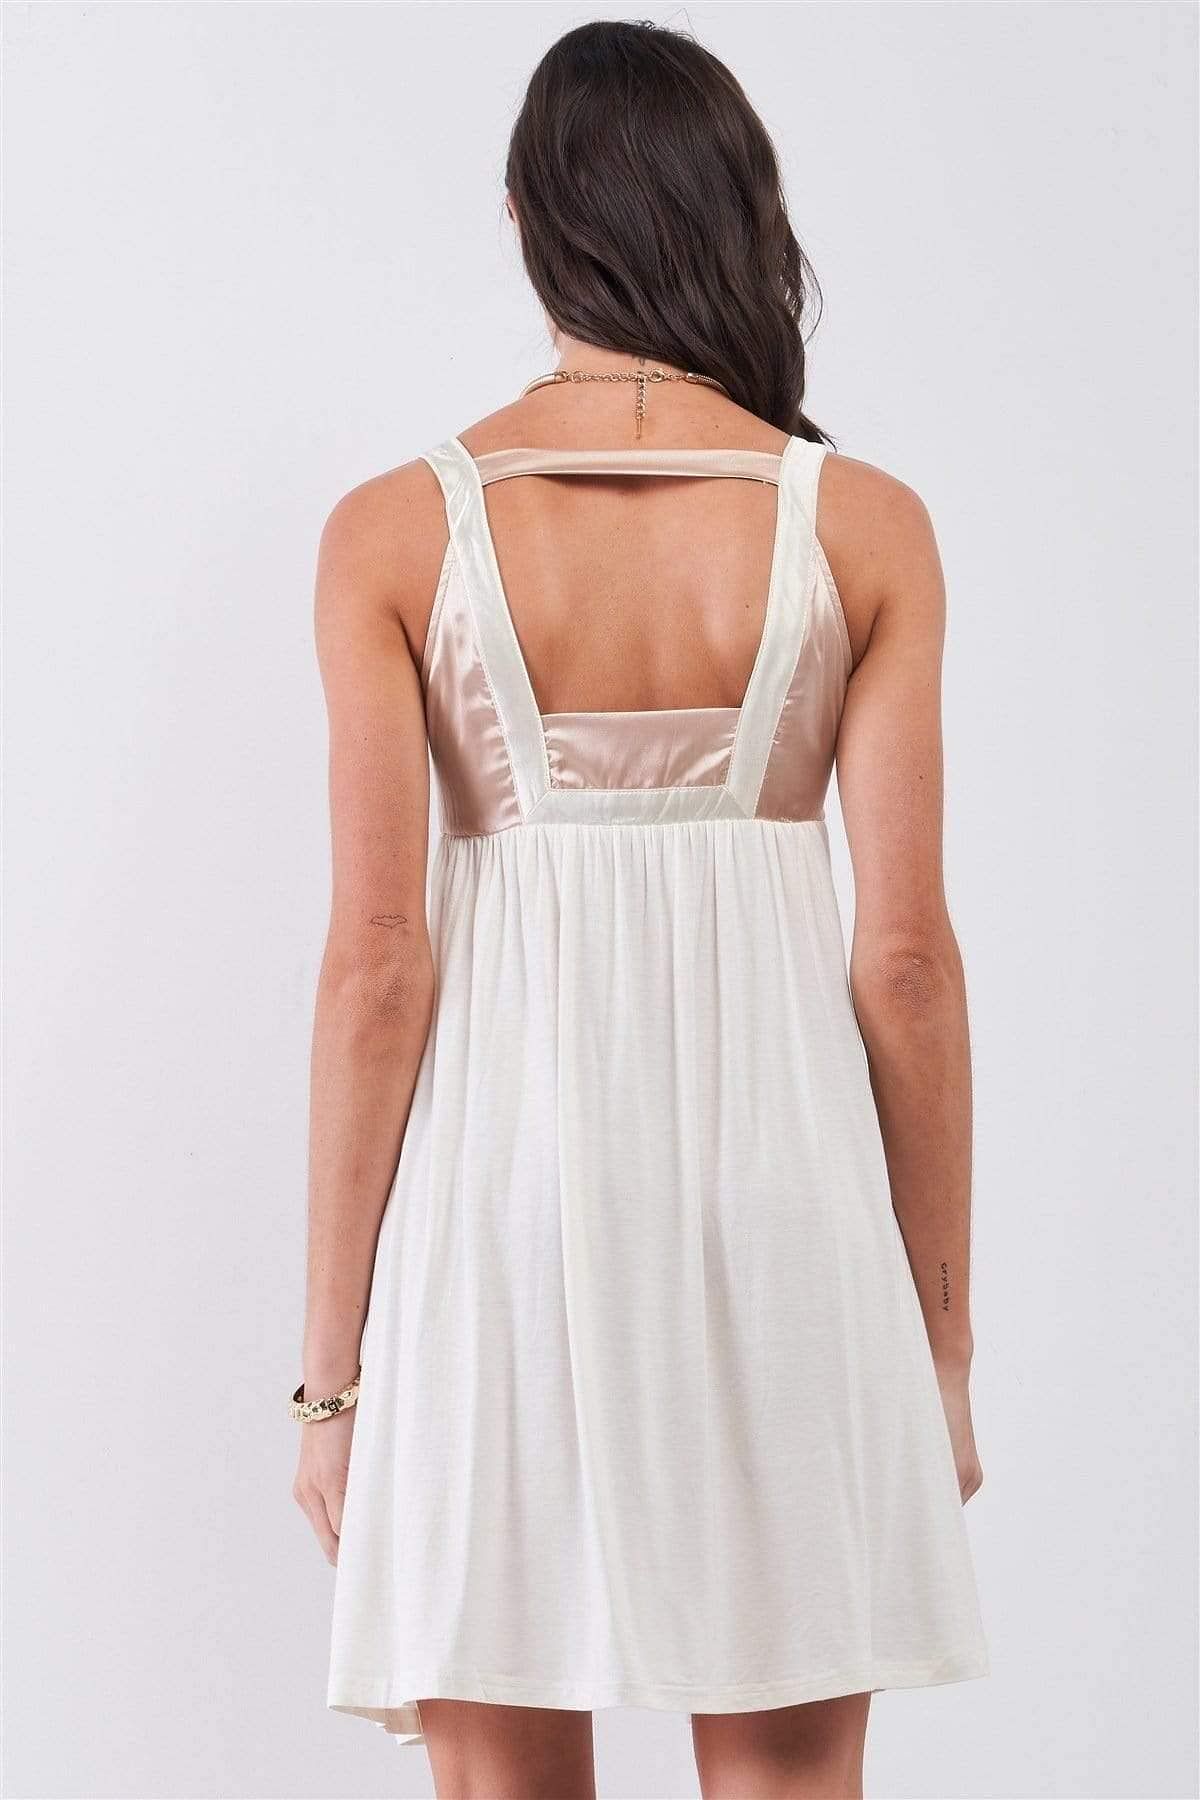 White Embroidered Sleeveless Satin Mini Dress - Shopping Therapy, LLC Dress